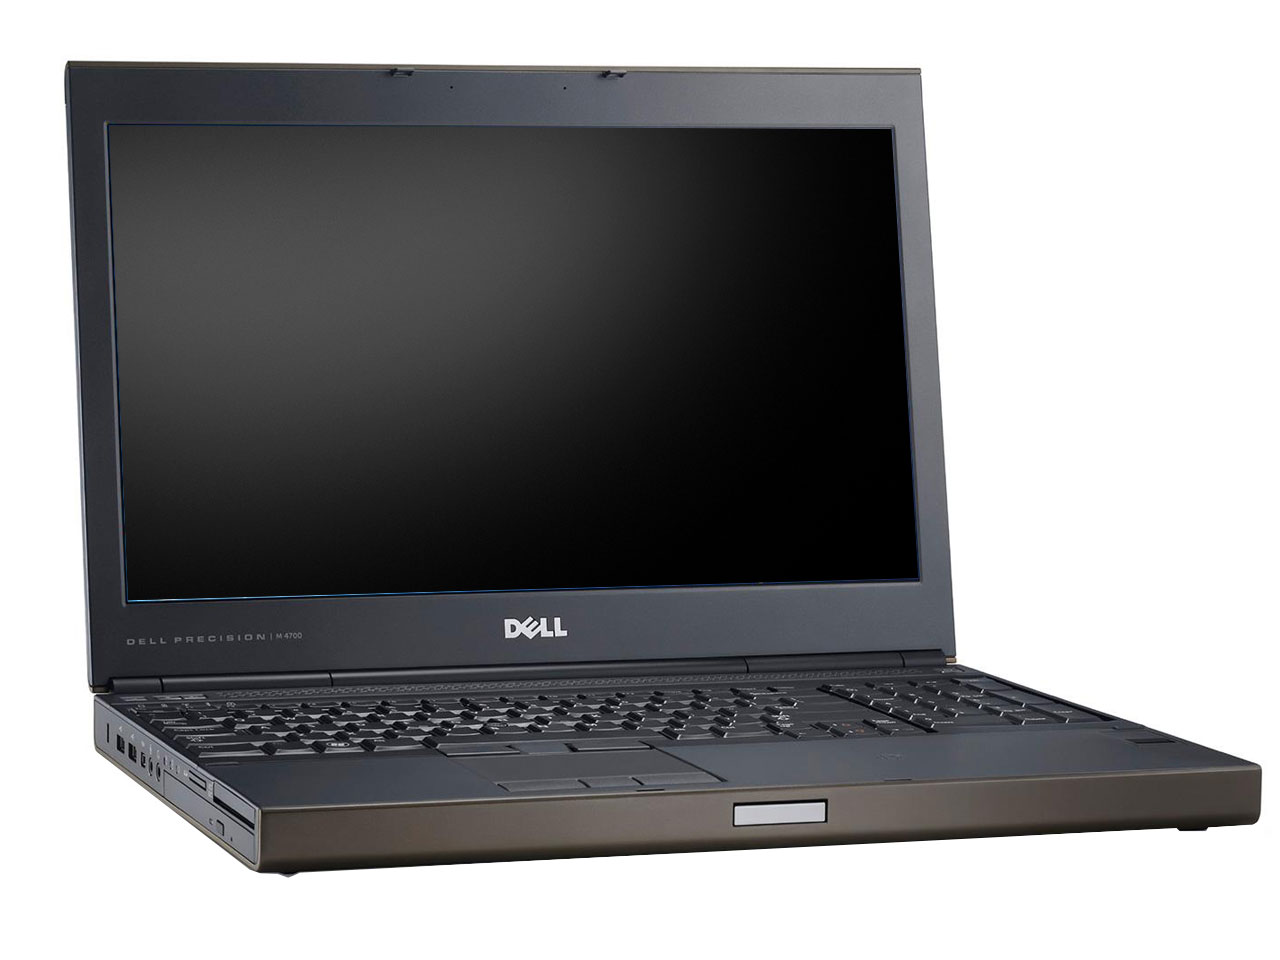 Dell Precision M4700  - shop.bb-net.de